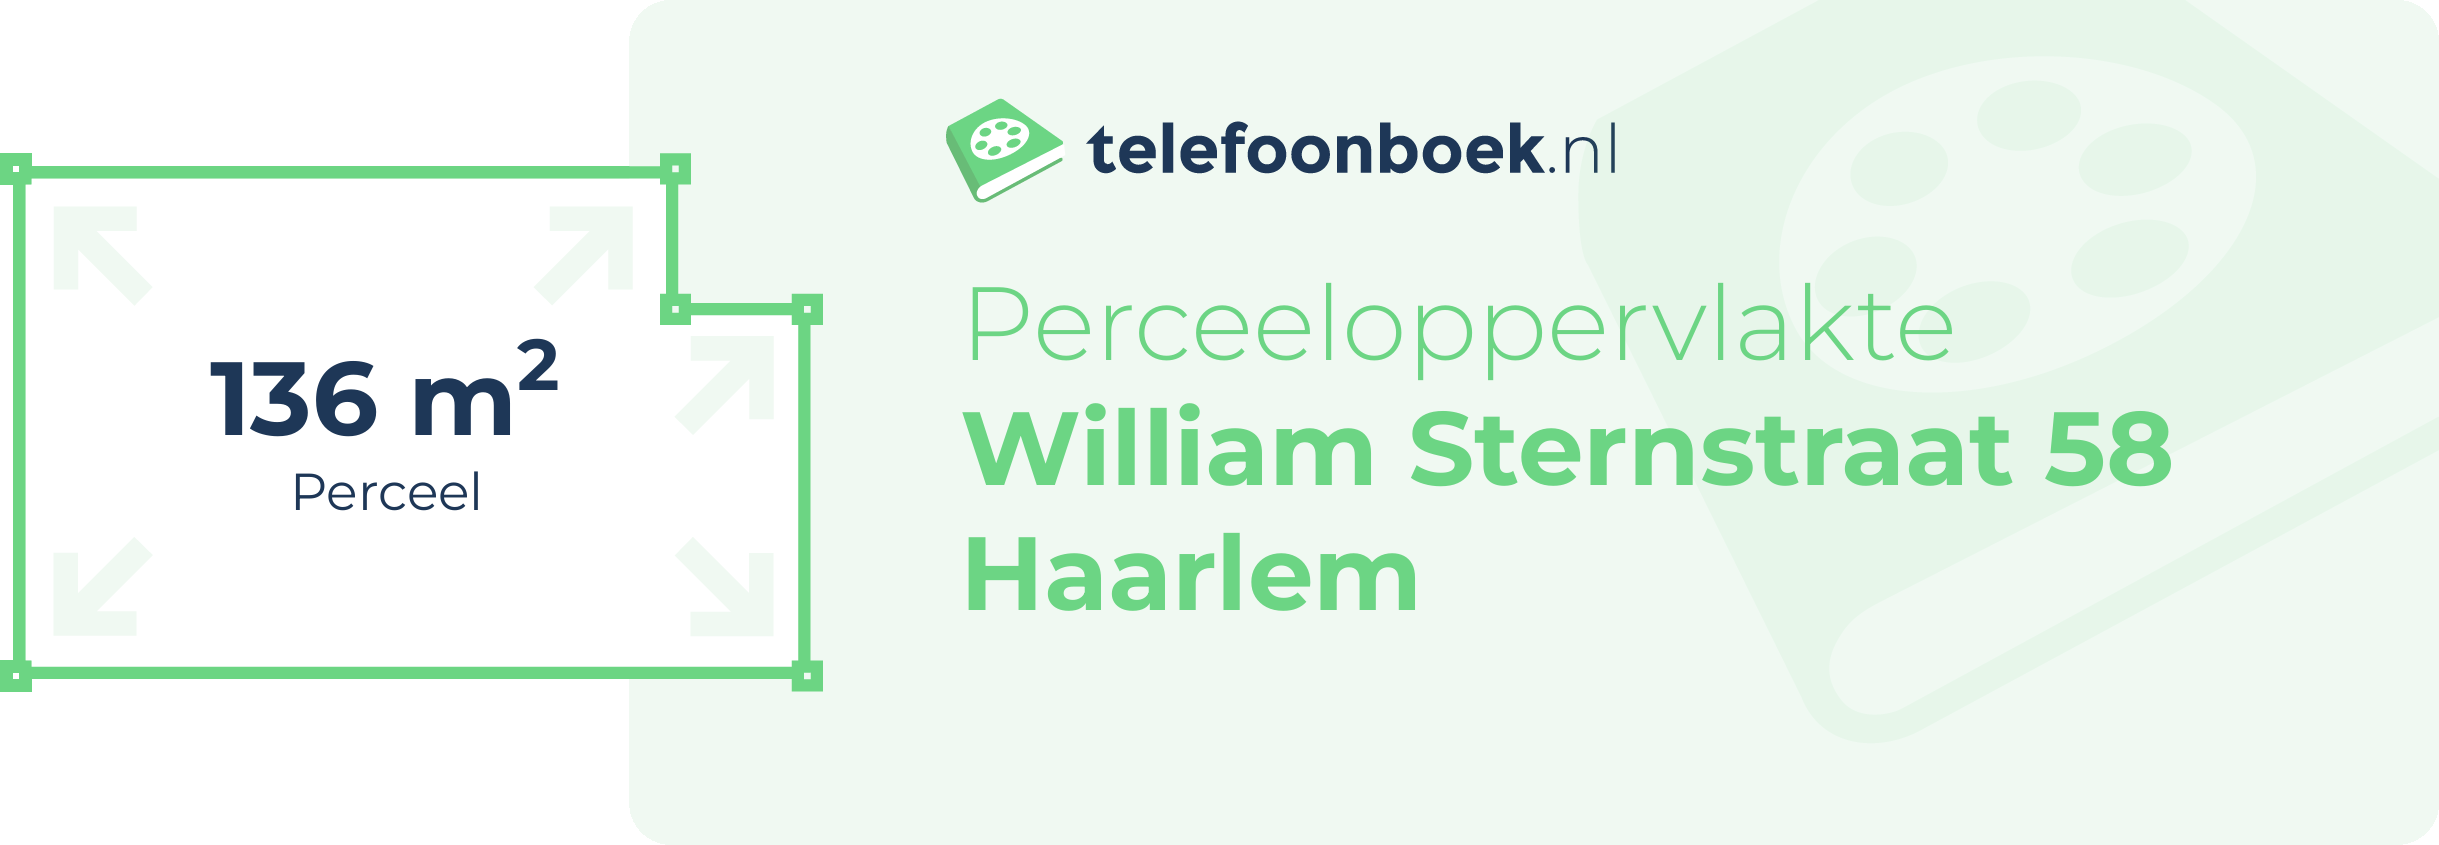 Perceeloppervlakte William Sternstraat 58 Haarlem